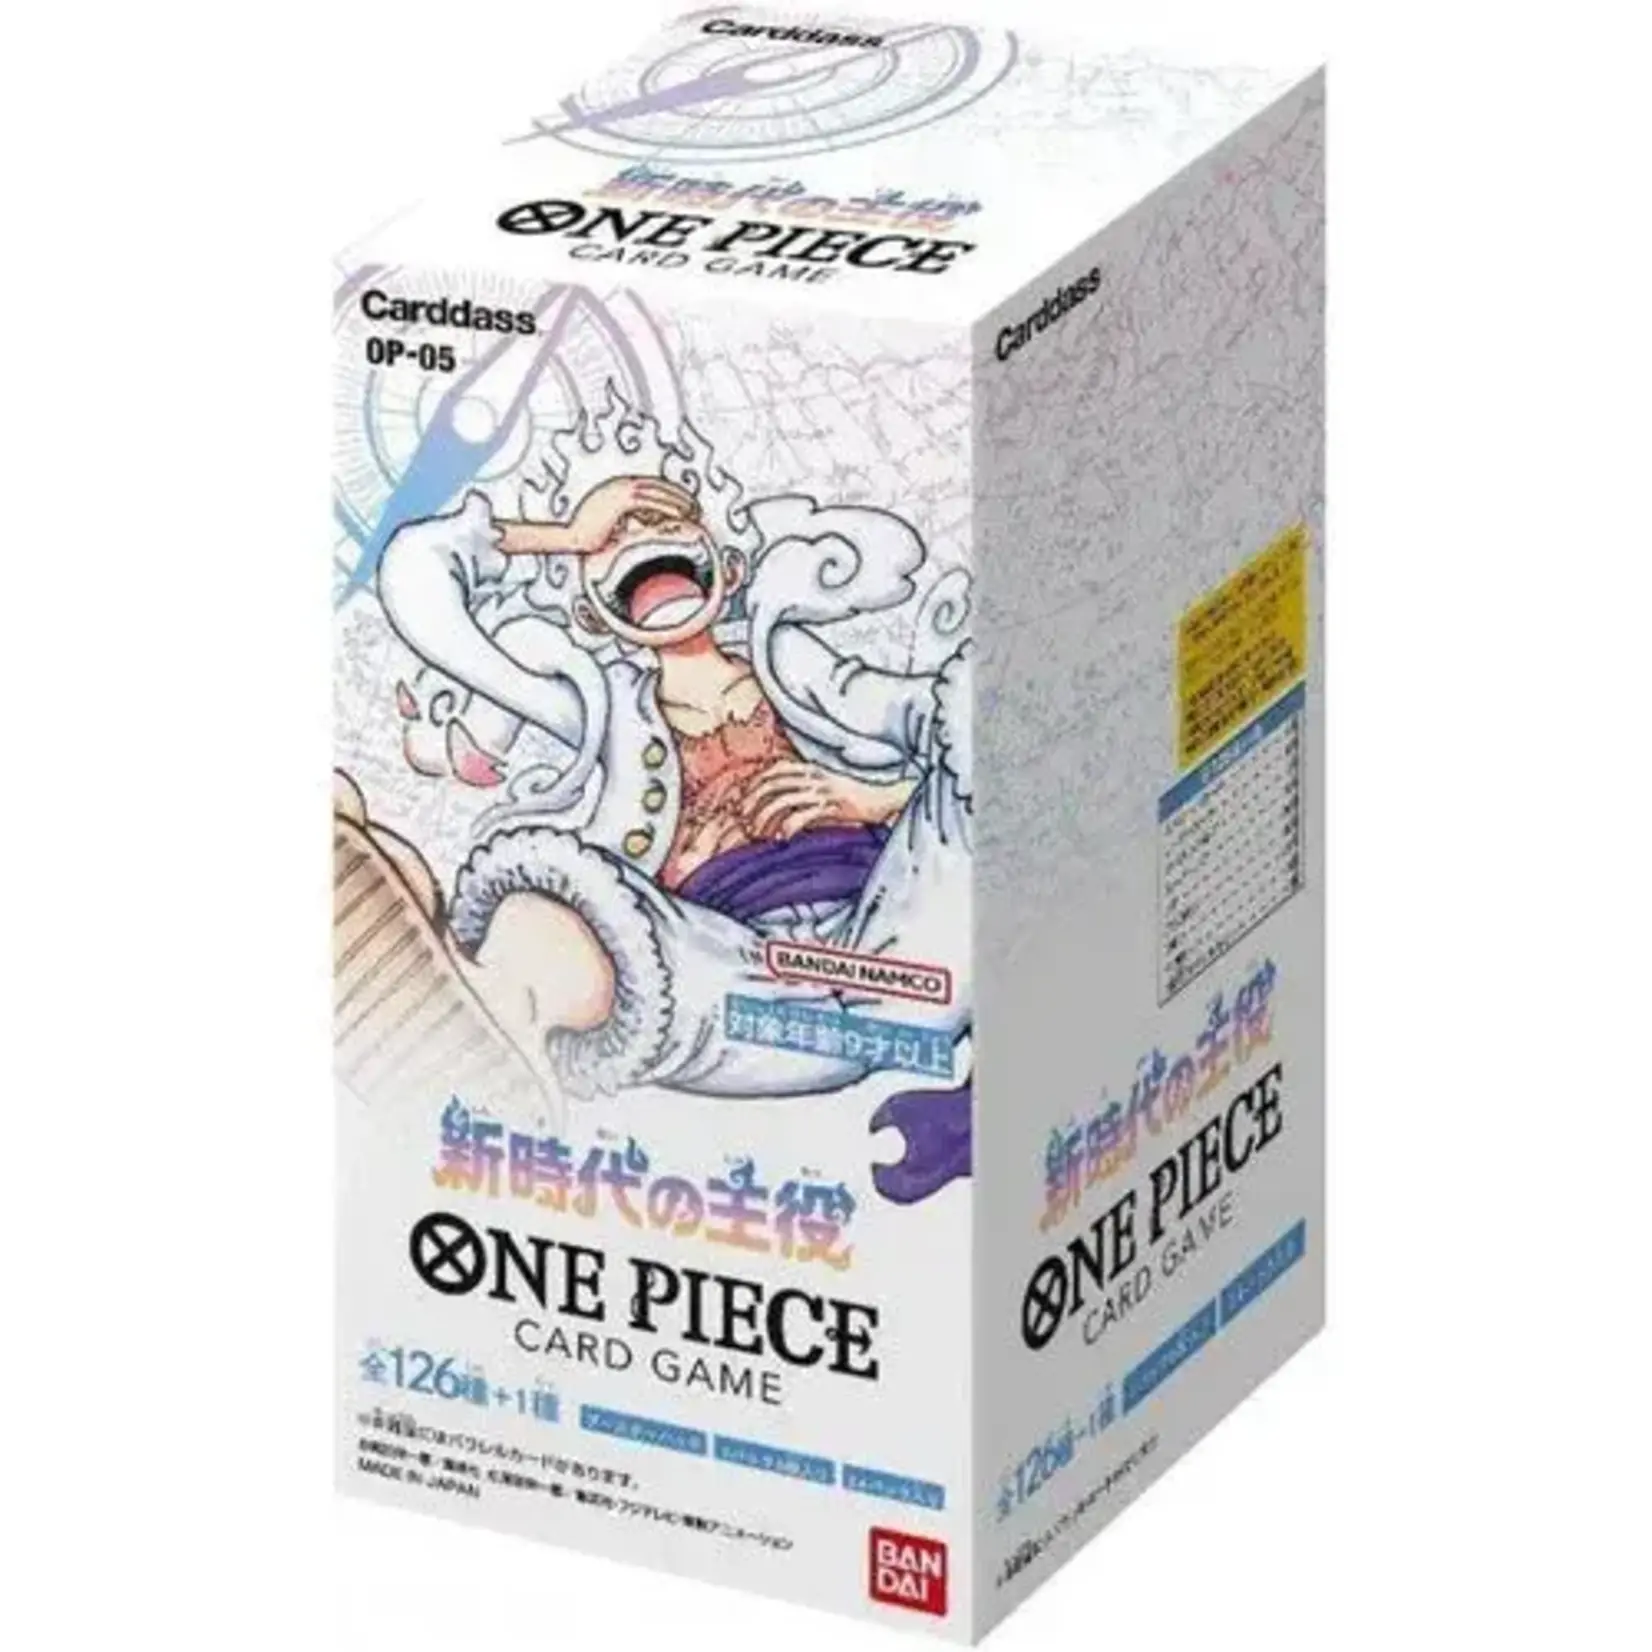 One Piece TCG: Japanese Awakening of the New Era Booster Box (OP-05)